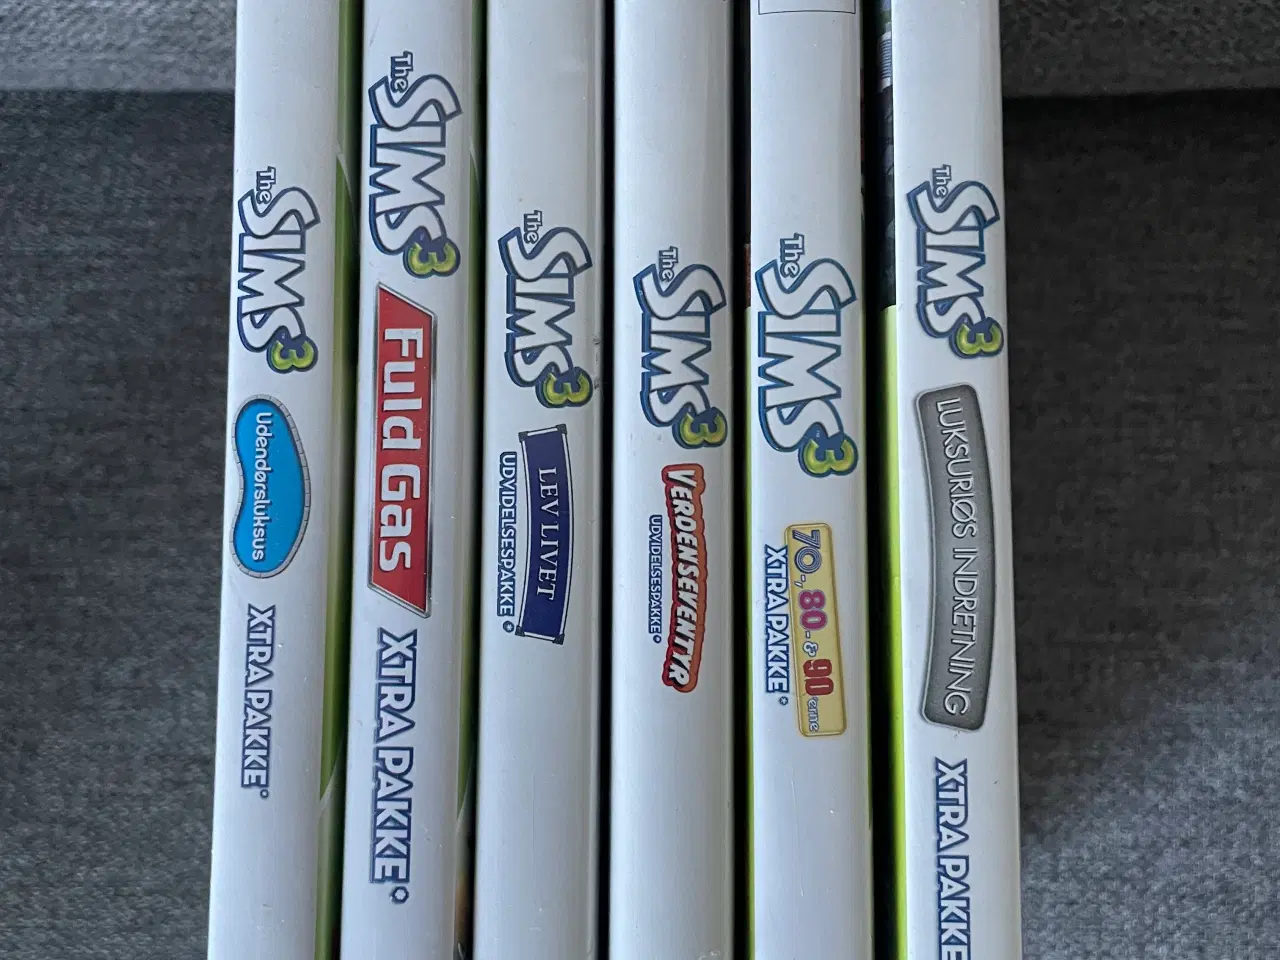 Billede 2 - 6 stk. The Sims 3, pris pr. stk.